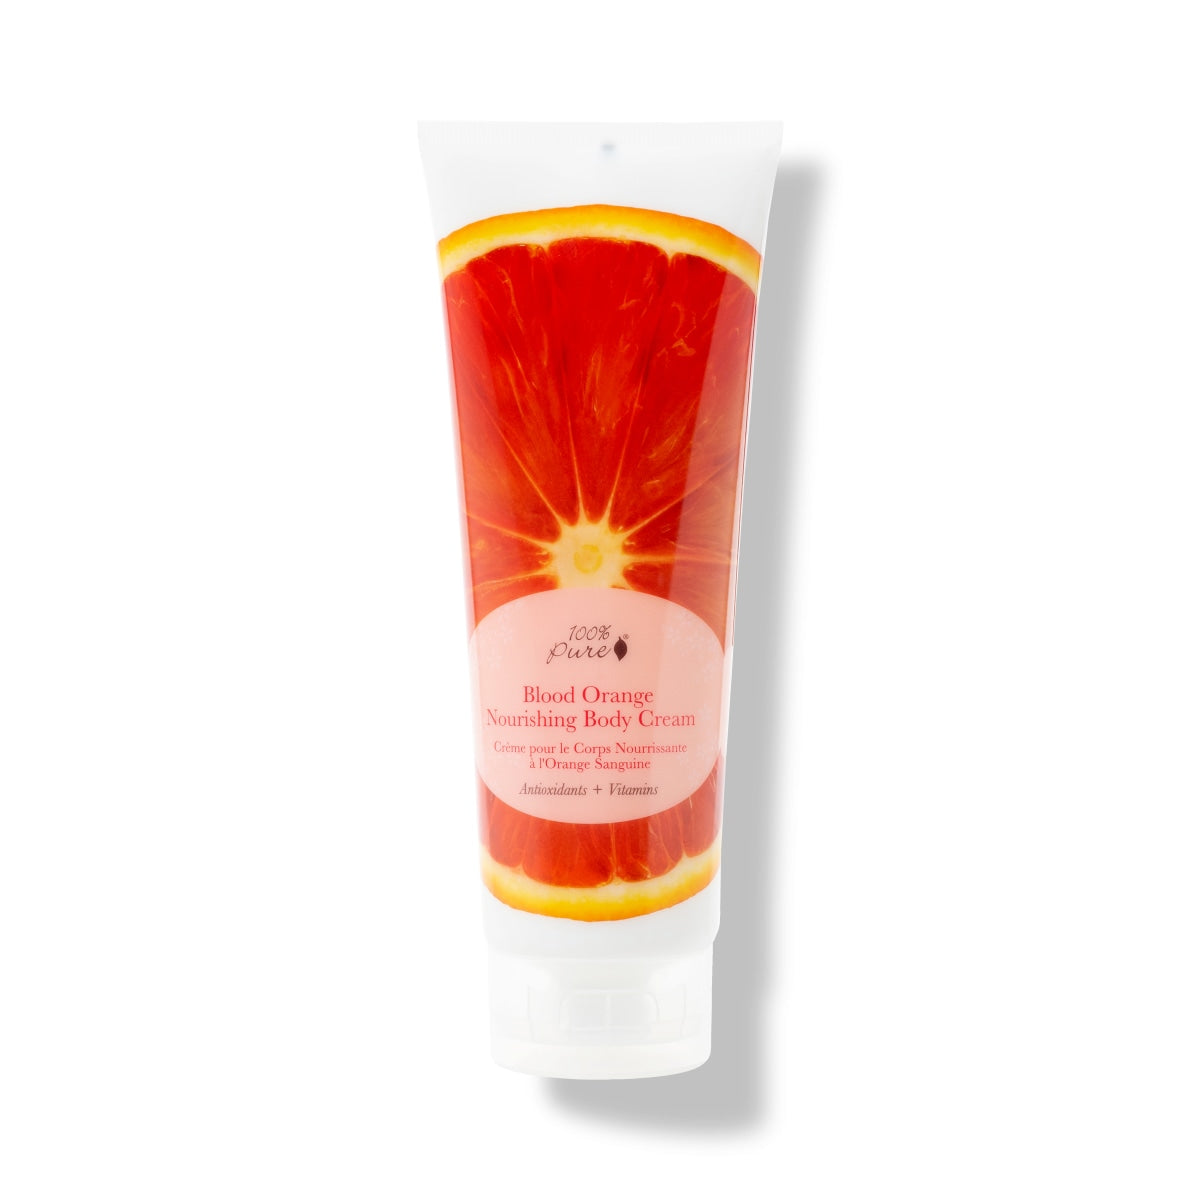 100% PURE® Blood Orange Nourishing Body Cream at Socialite Beauty Canada